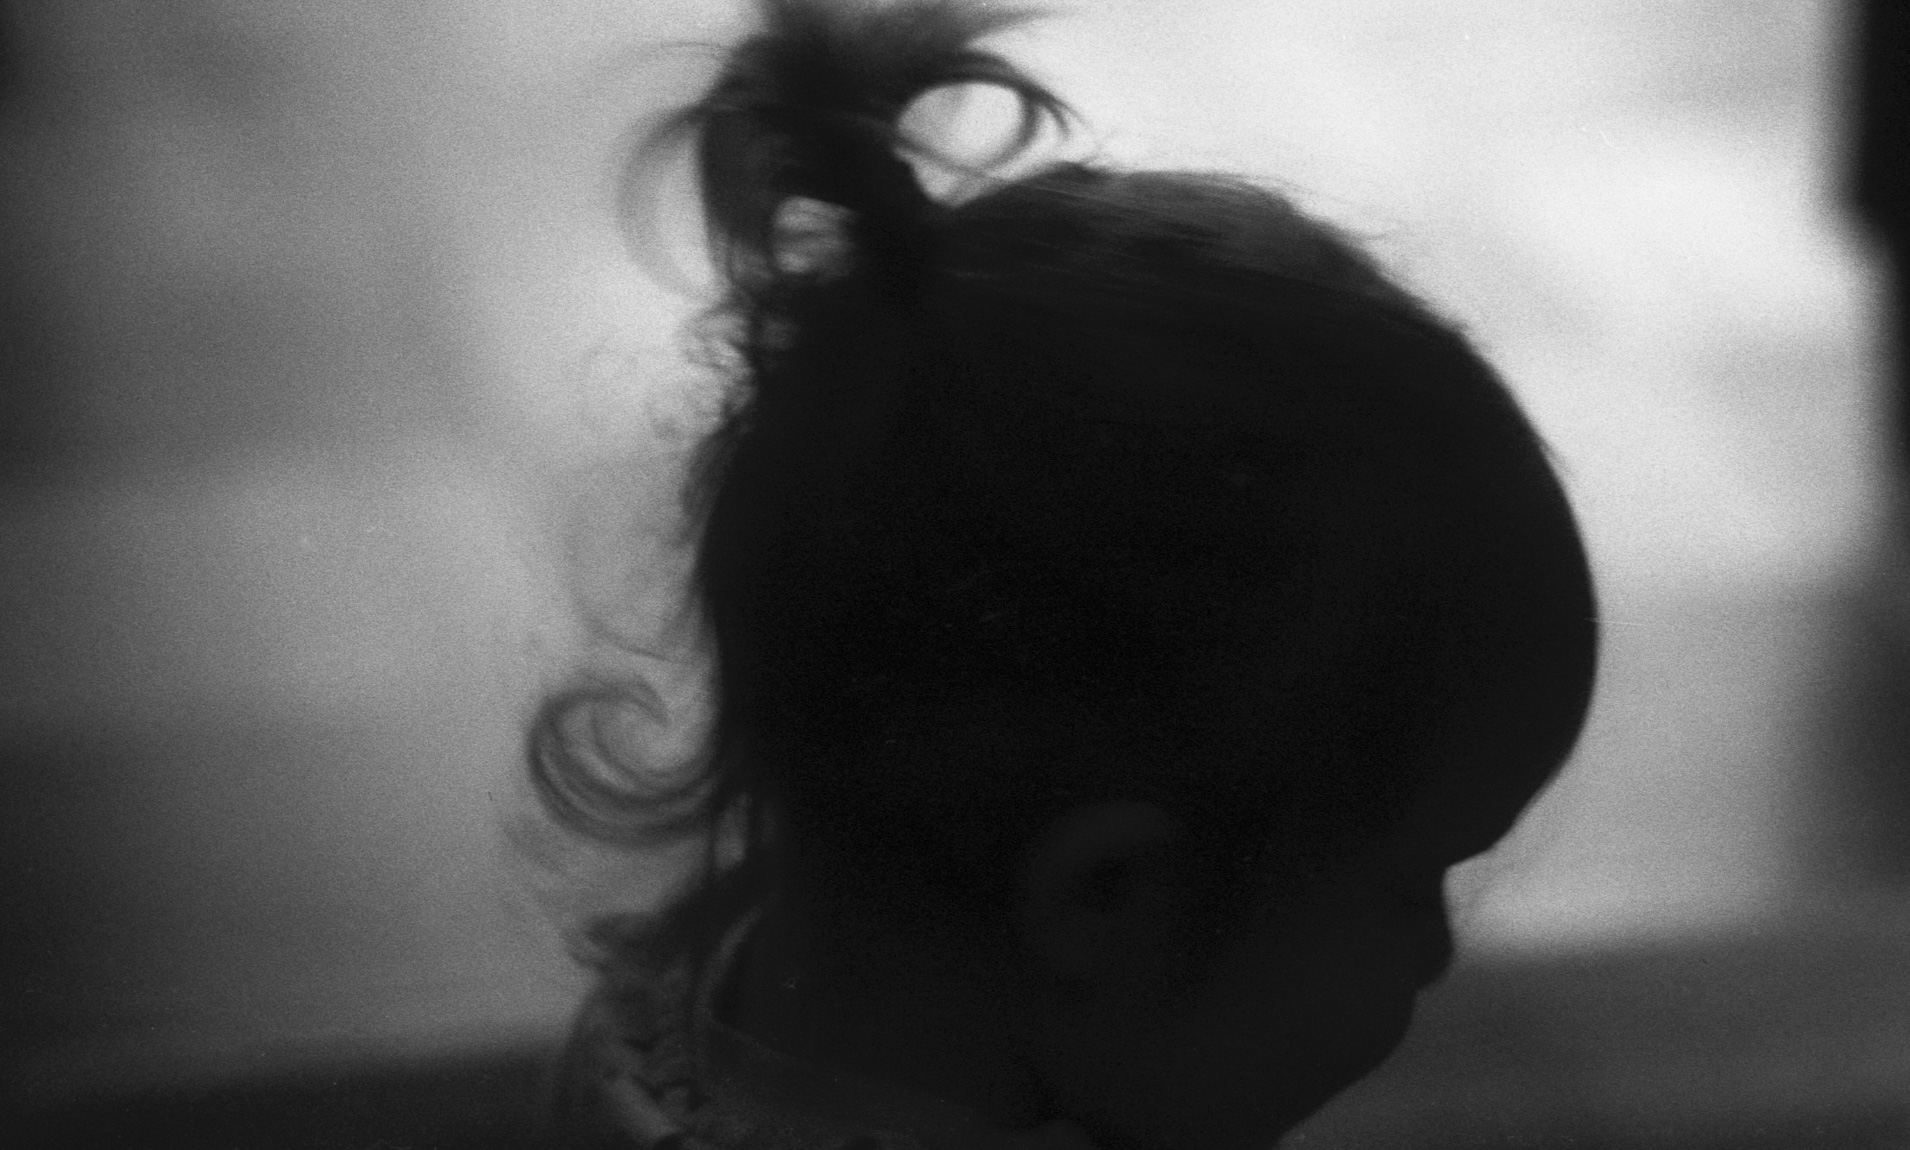 A photograph of a small child's head in silllouhette 